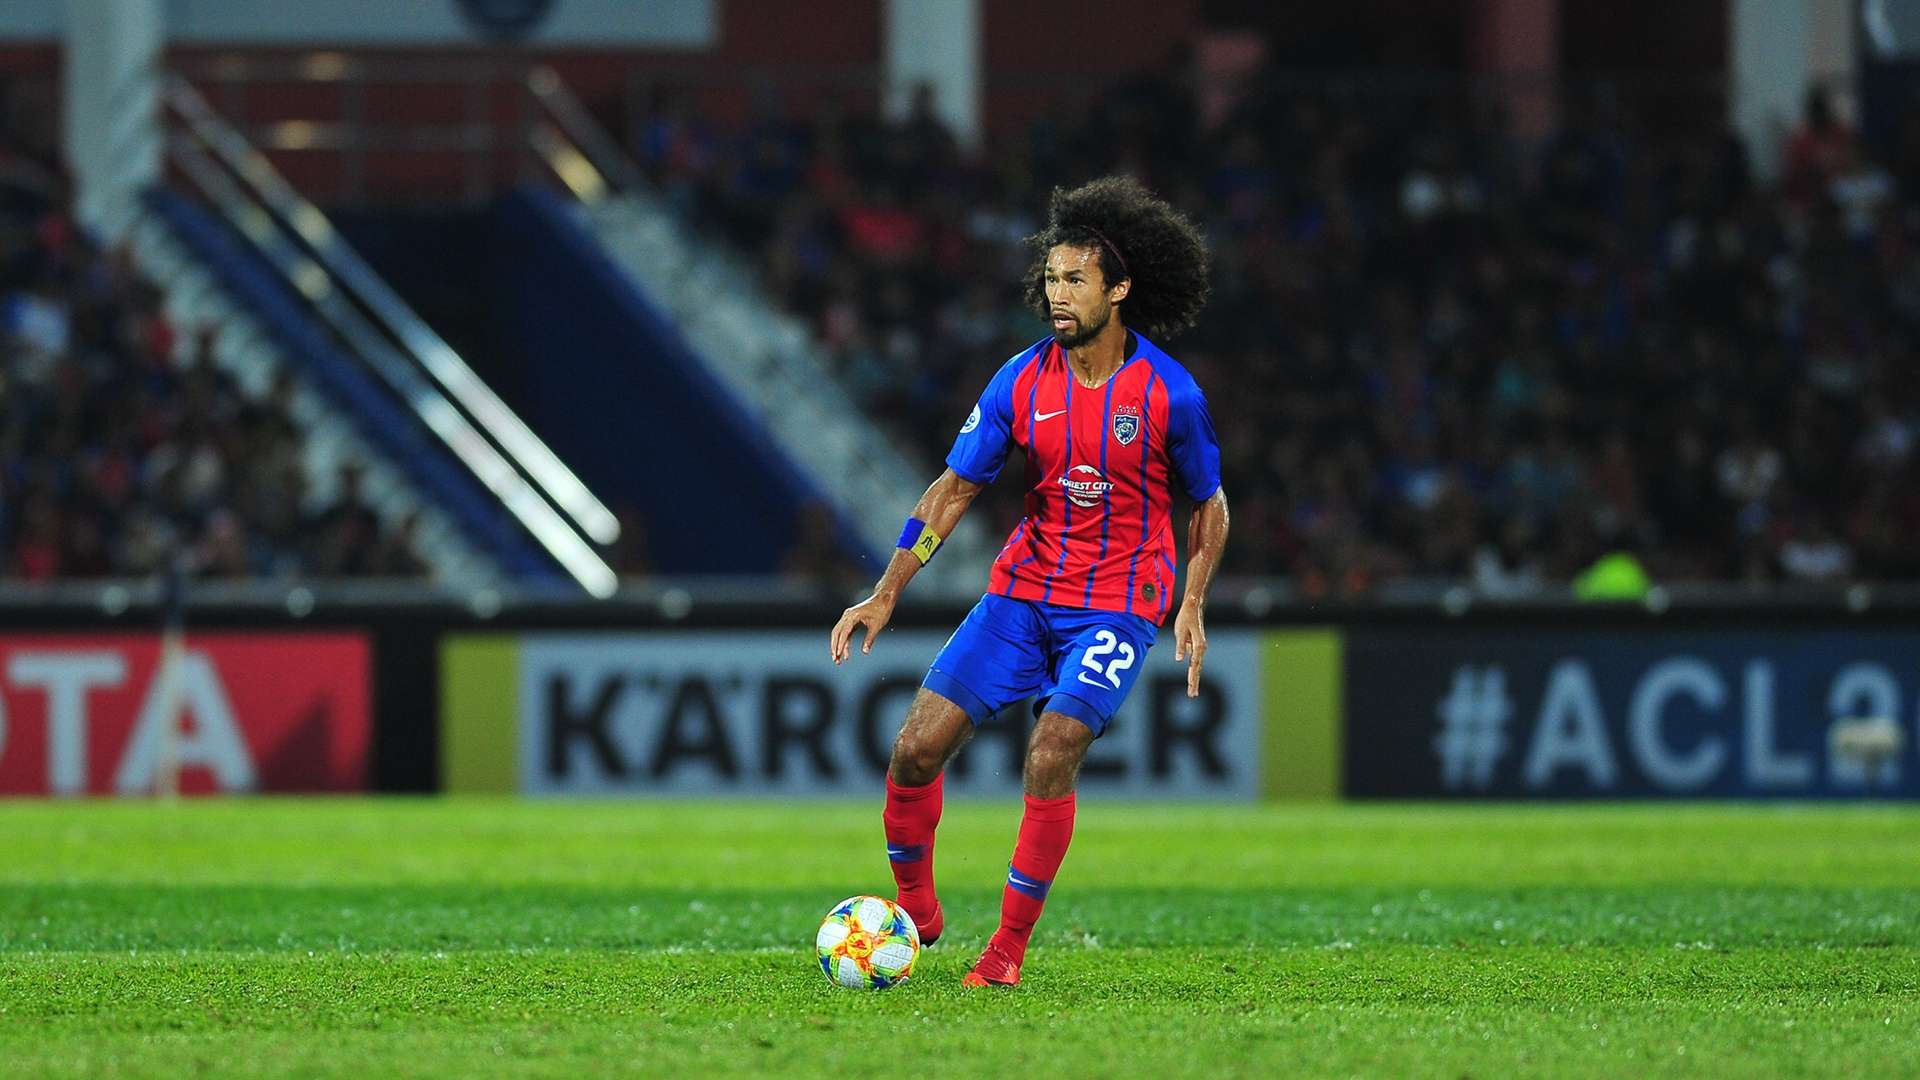 La'Vere Corbin-Ong, Johor Darul Ta'zim v Gyeongnam, AFC Champions League